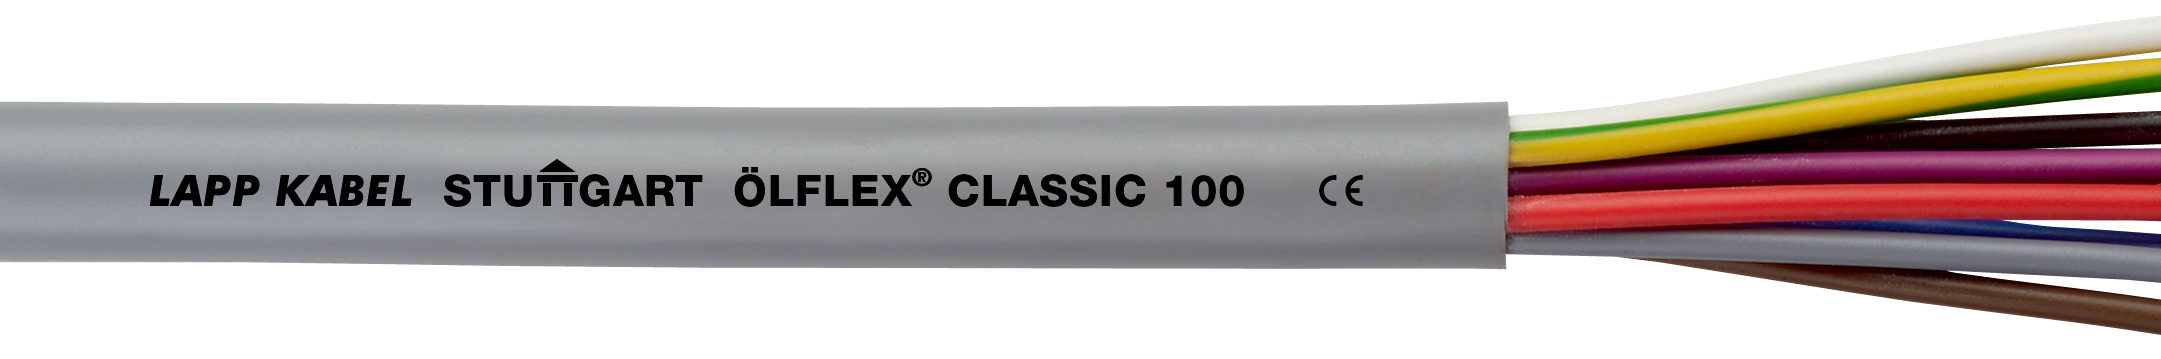 ÖLFLEX CLASSIC 100 5G6 450/750V